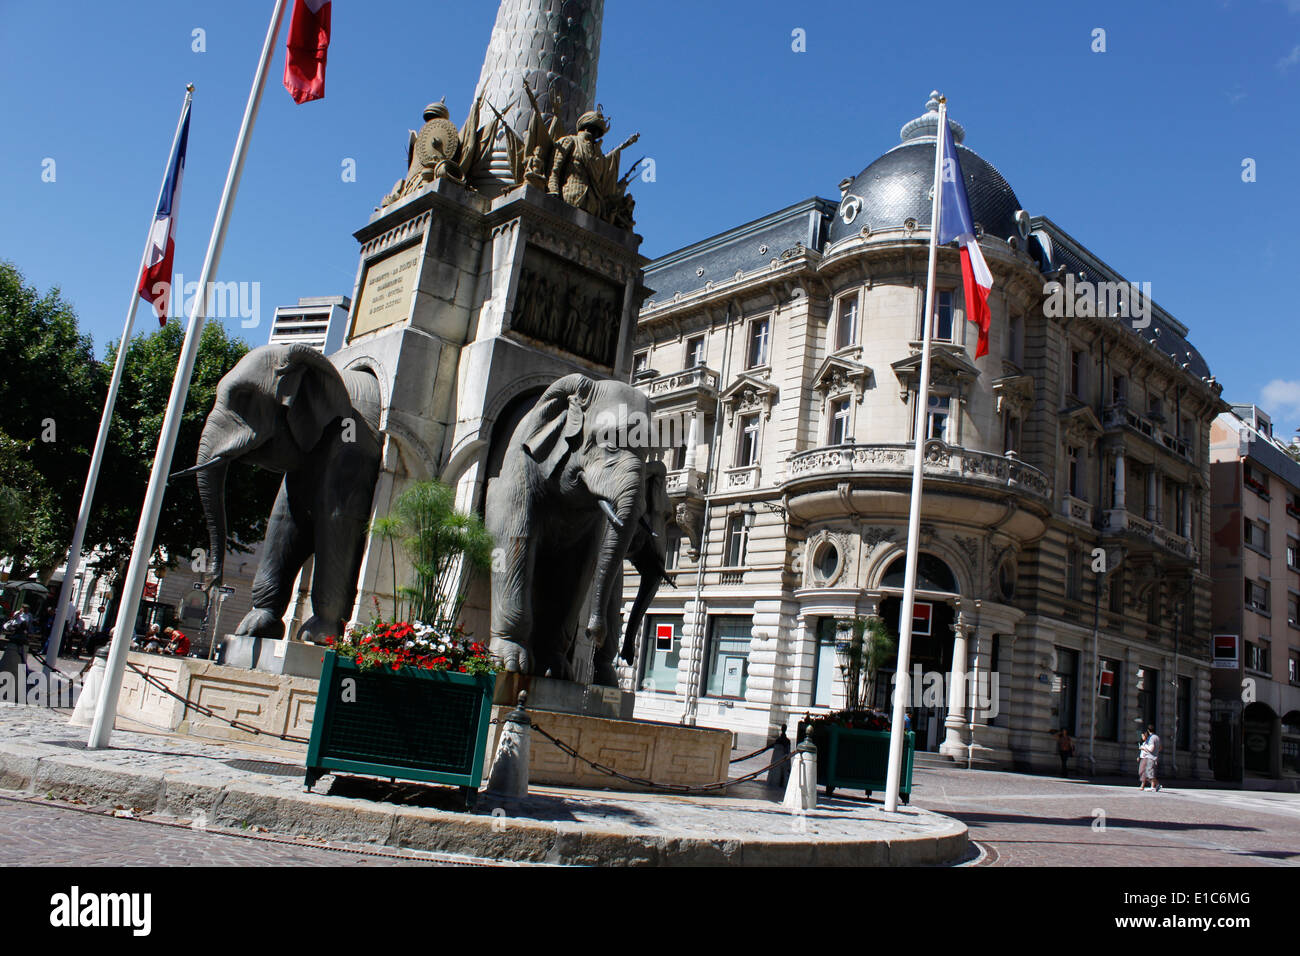 Fountain of the elephants, Les quatre sans cul, Chambery, Savoie, Savoy, Auvergne Rhone-Alpes, France. Stock Photo